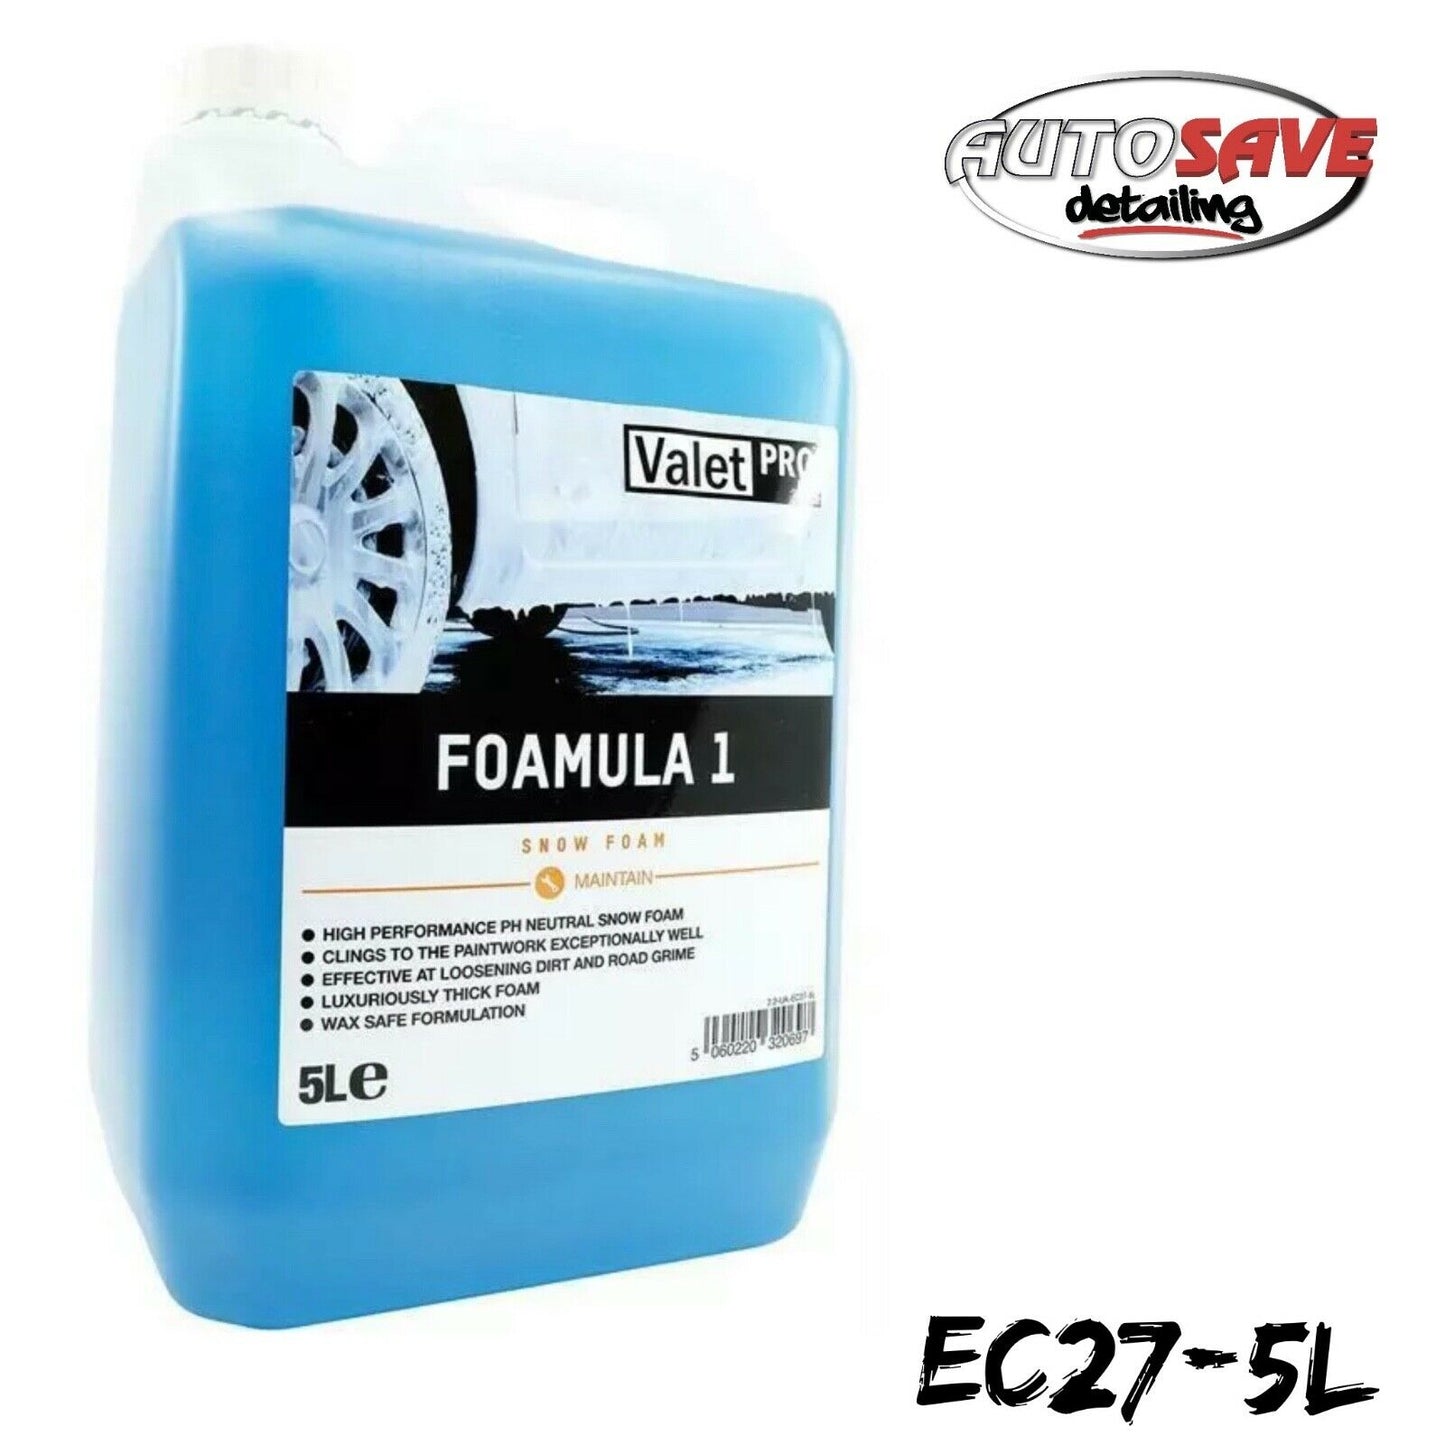 Valet Pro Foamula 1 Snow Foam, Valeting, Detailing pH Neutral Wax Safe